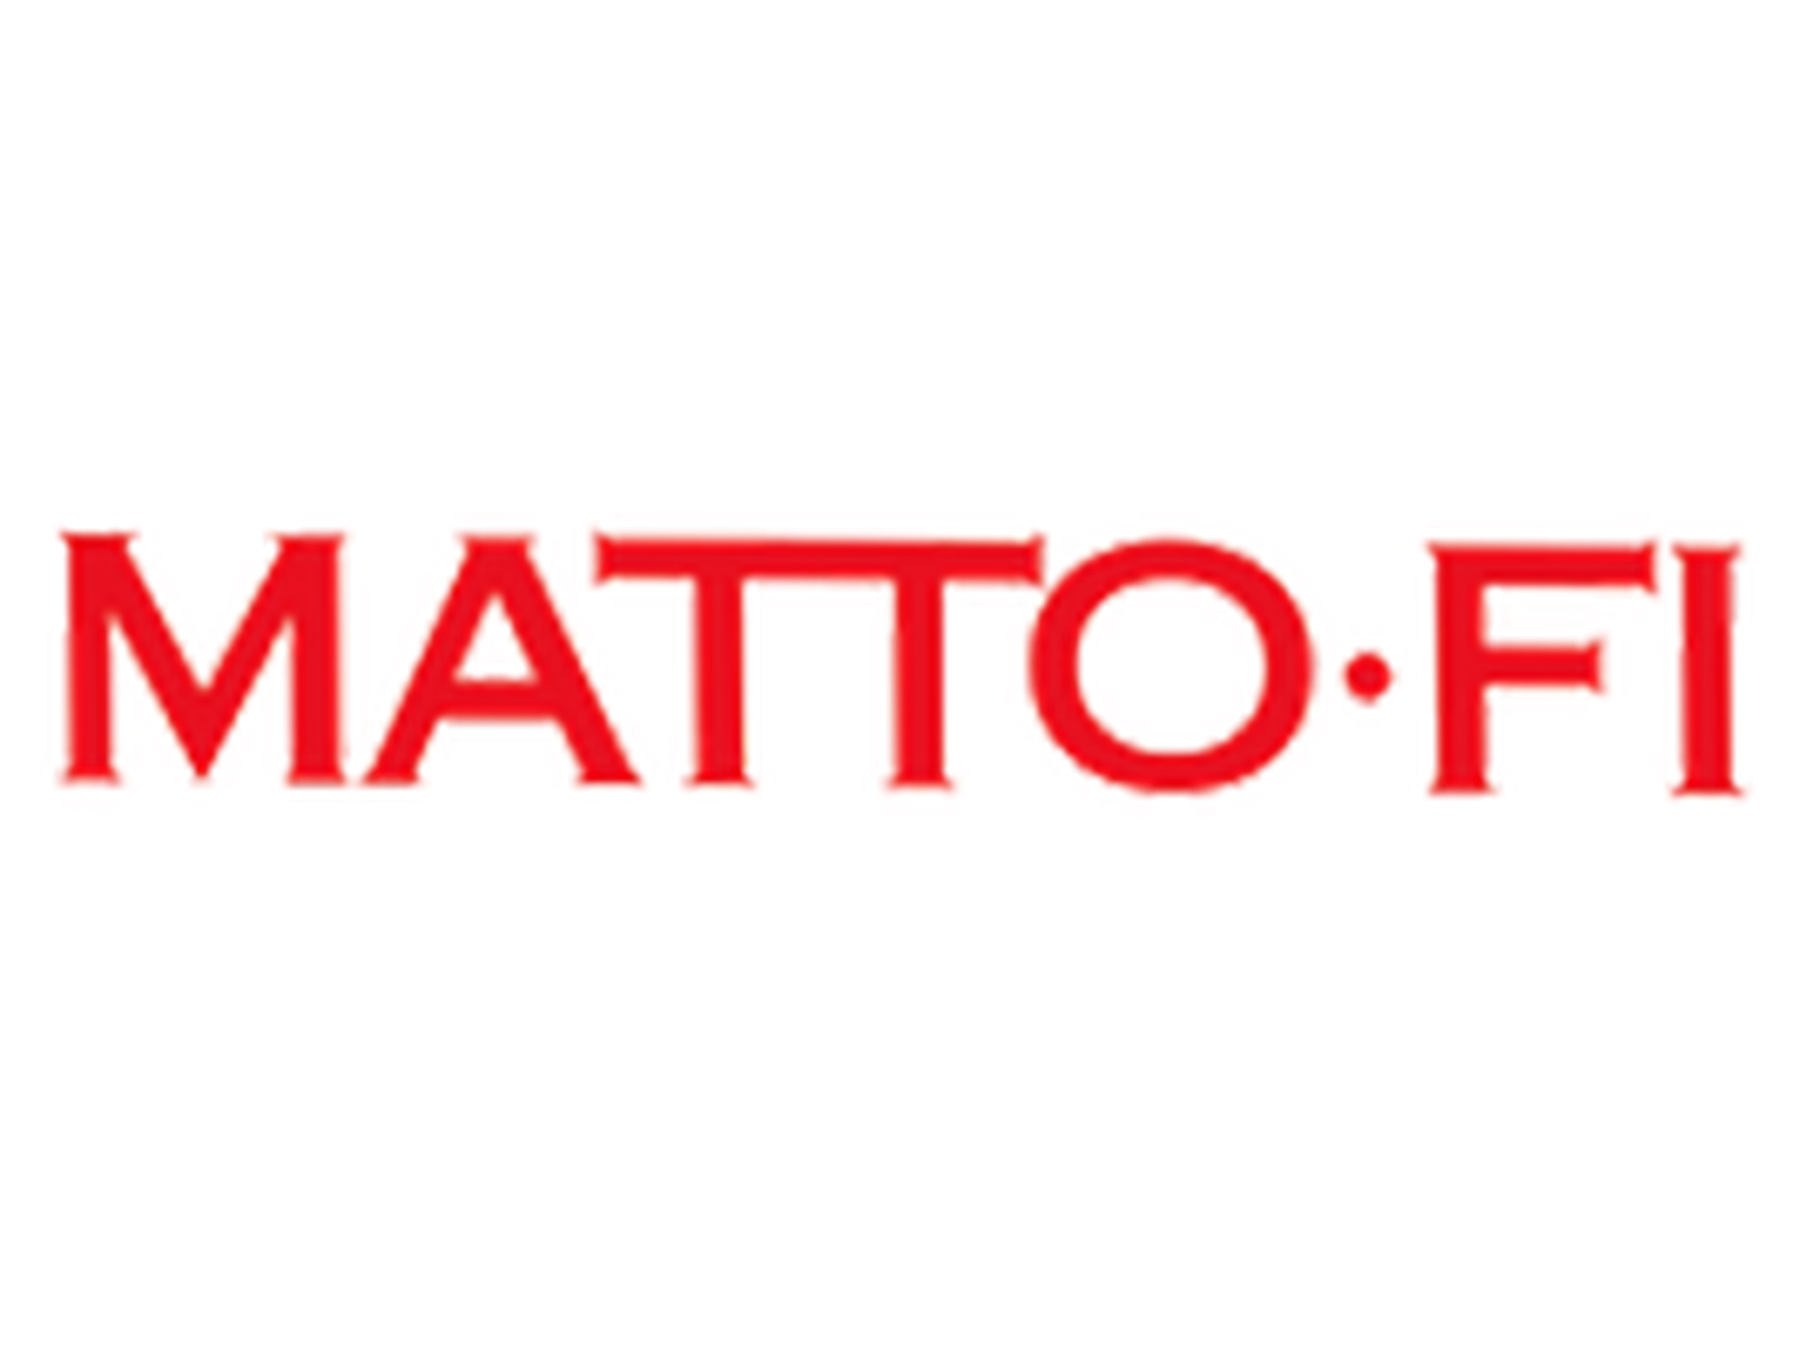 Matto.fi alennuskoodi